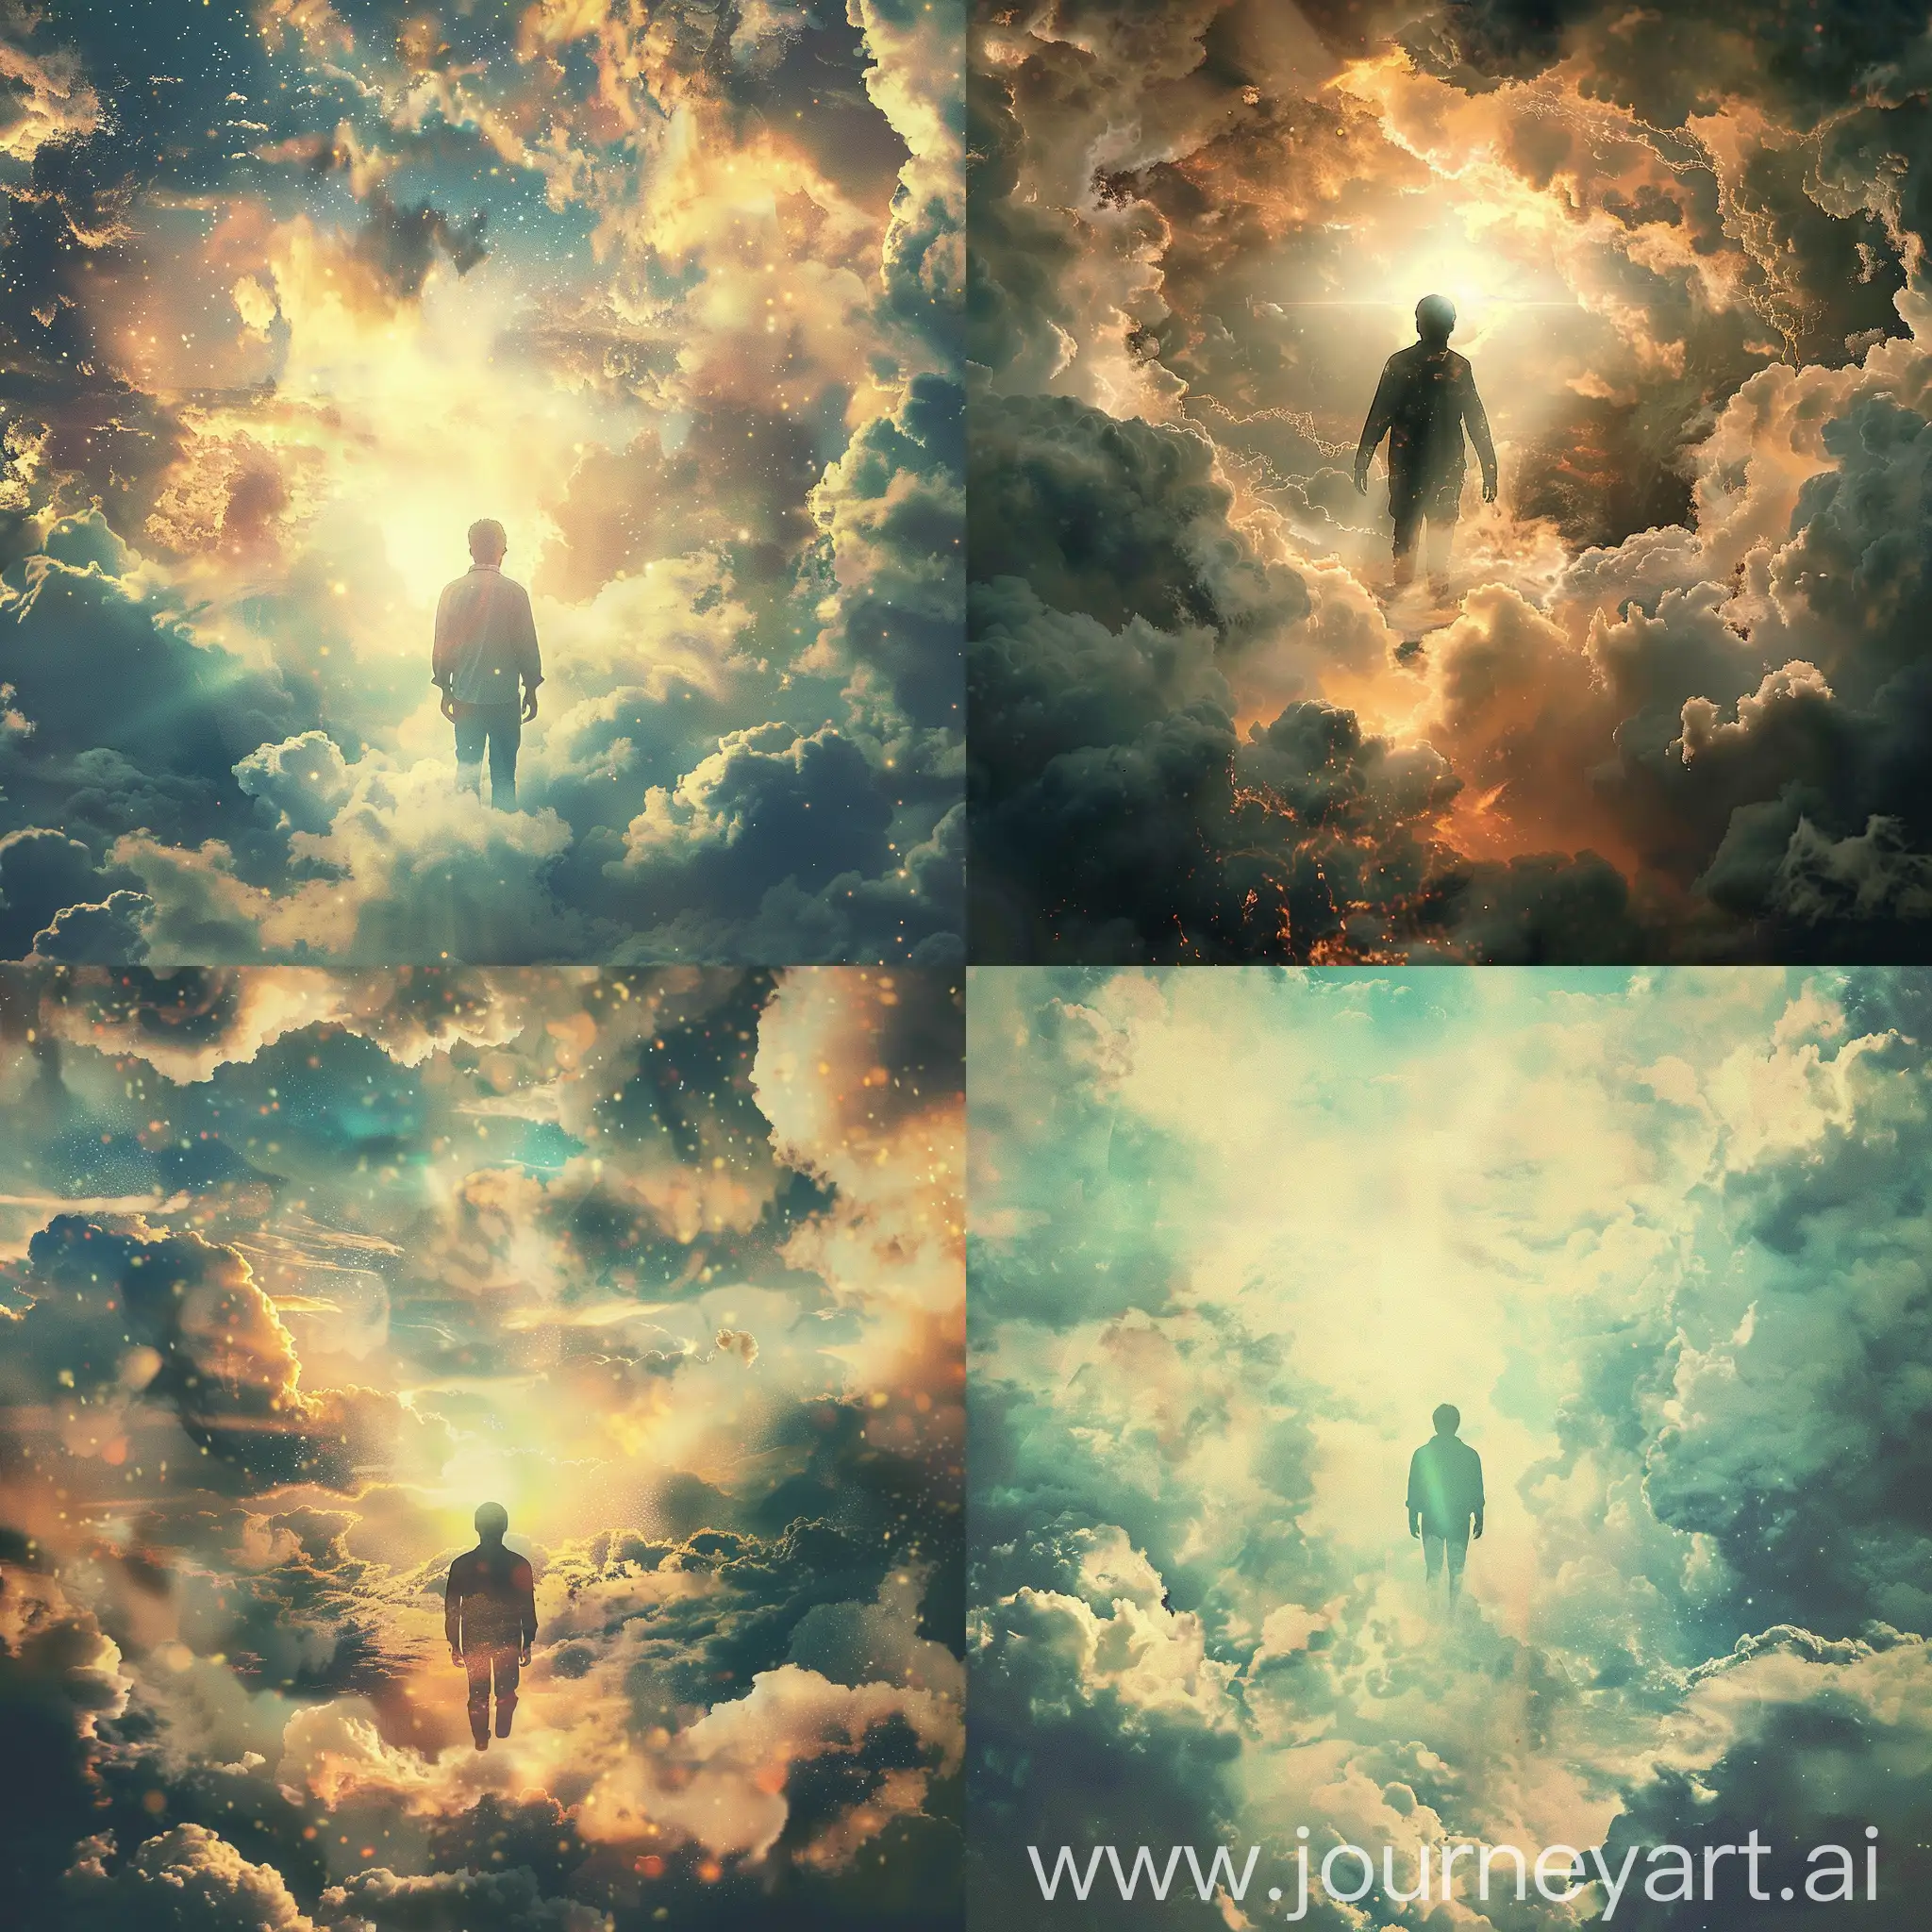 Ethereal-Fantasy-Movie-Poster-Boys-Spiritual-Awakening-Amidst-Clouds